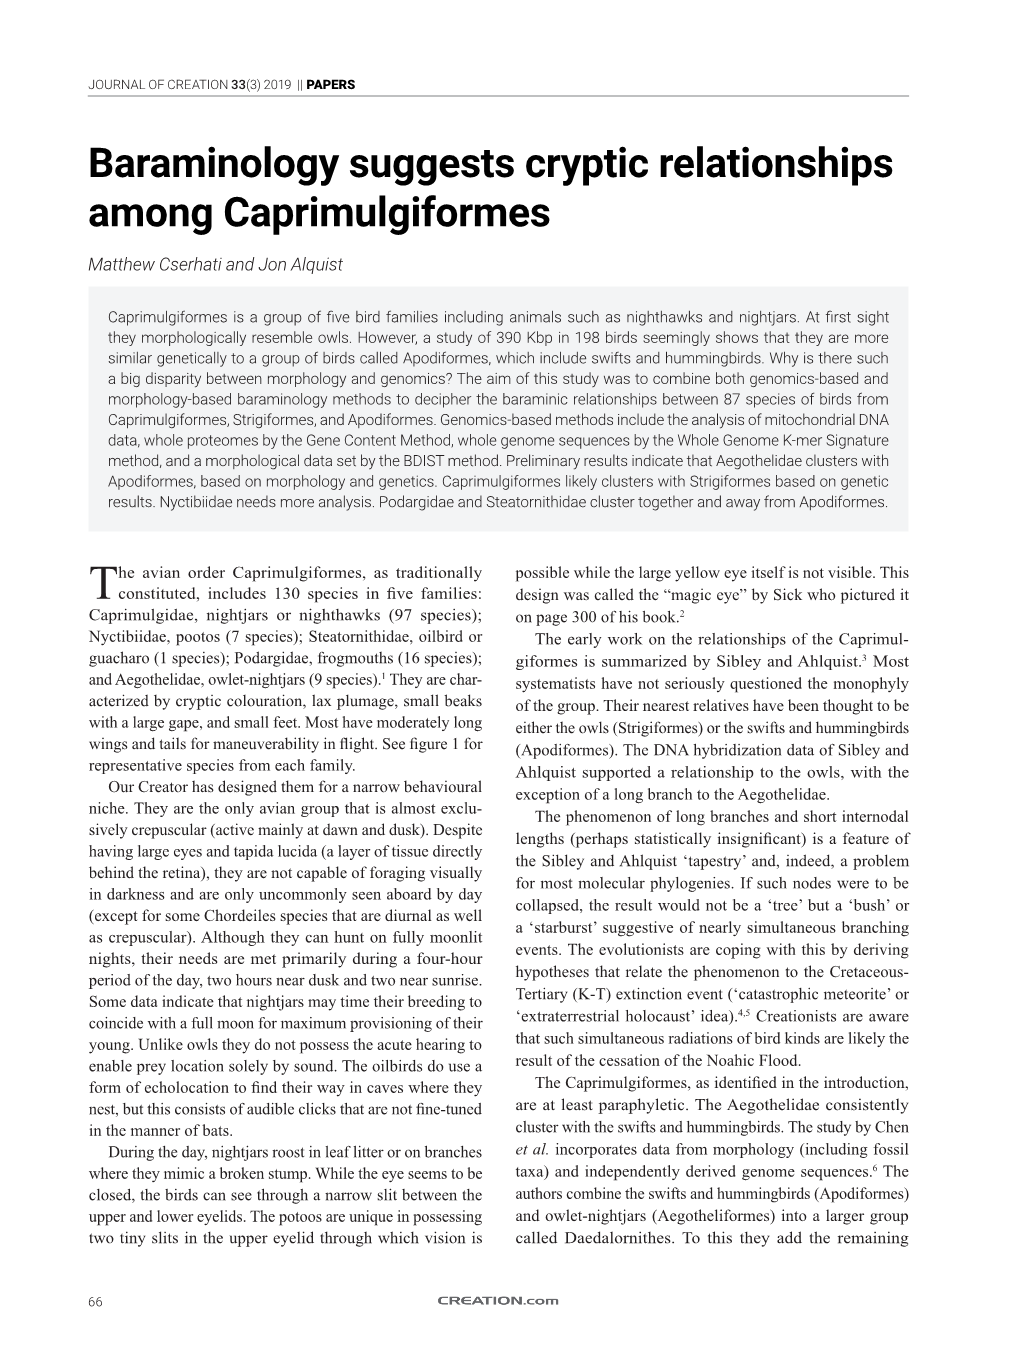 Baraminology Suggests Cryptic Relationships Among Caprimulgiformes